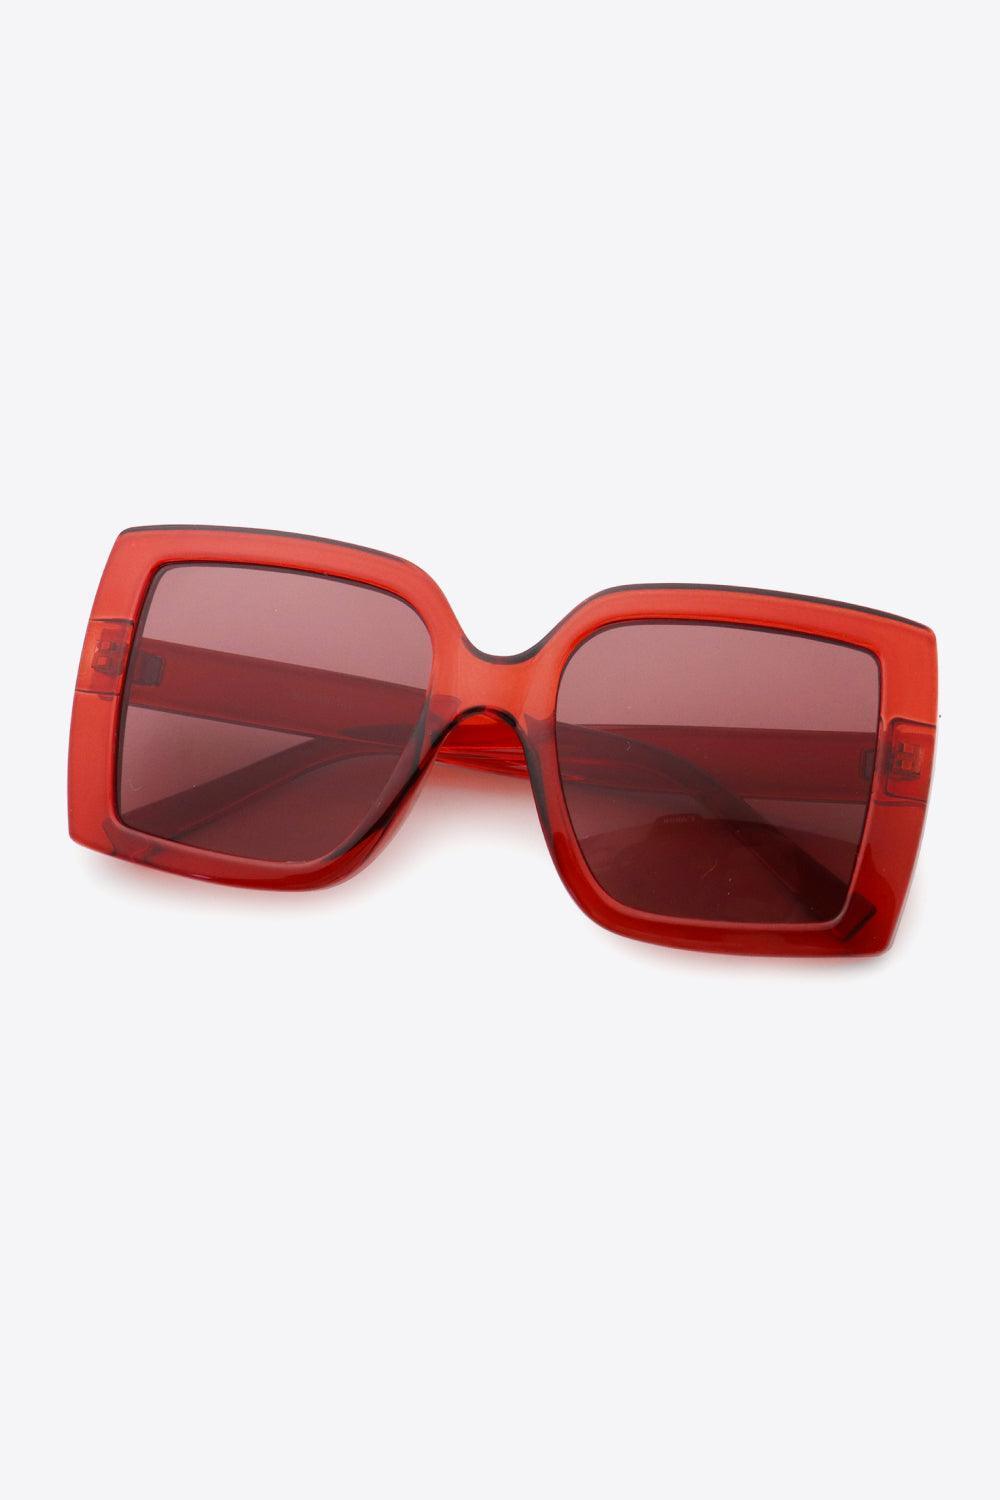 Red Frame Square Shape Acetate Sunglasses - MXSTUDIO.COM